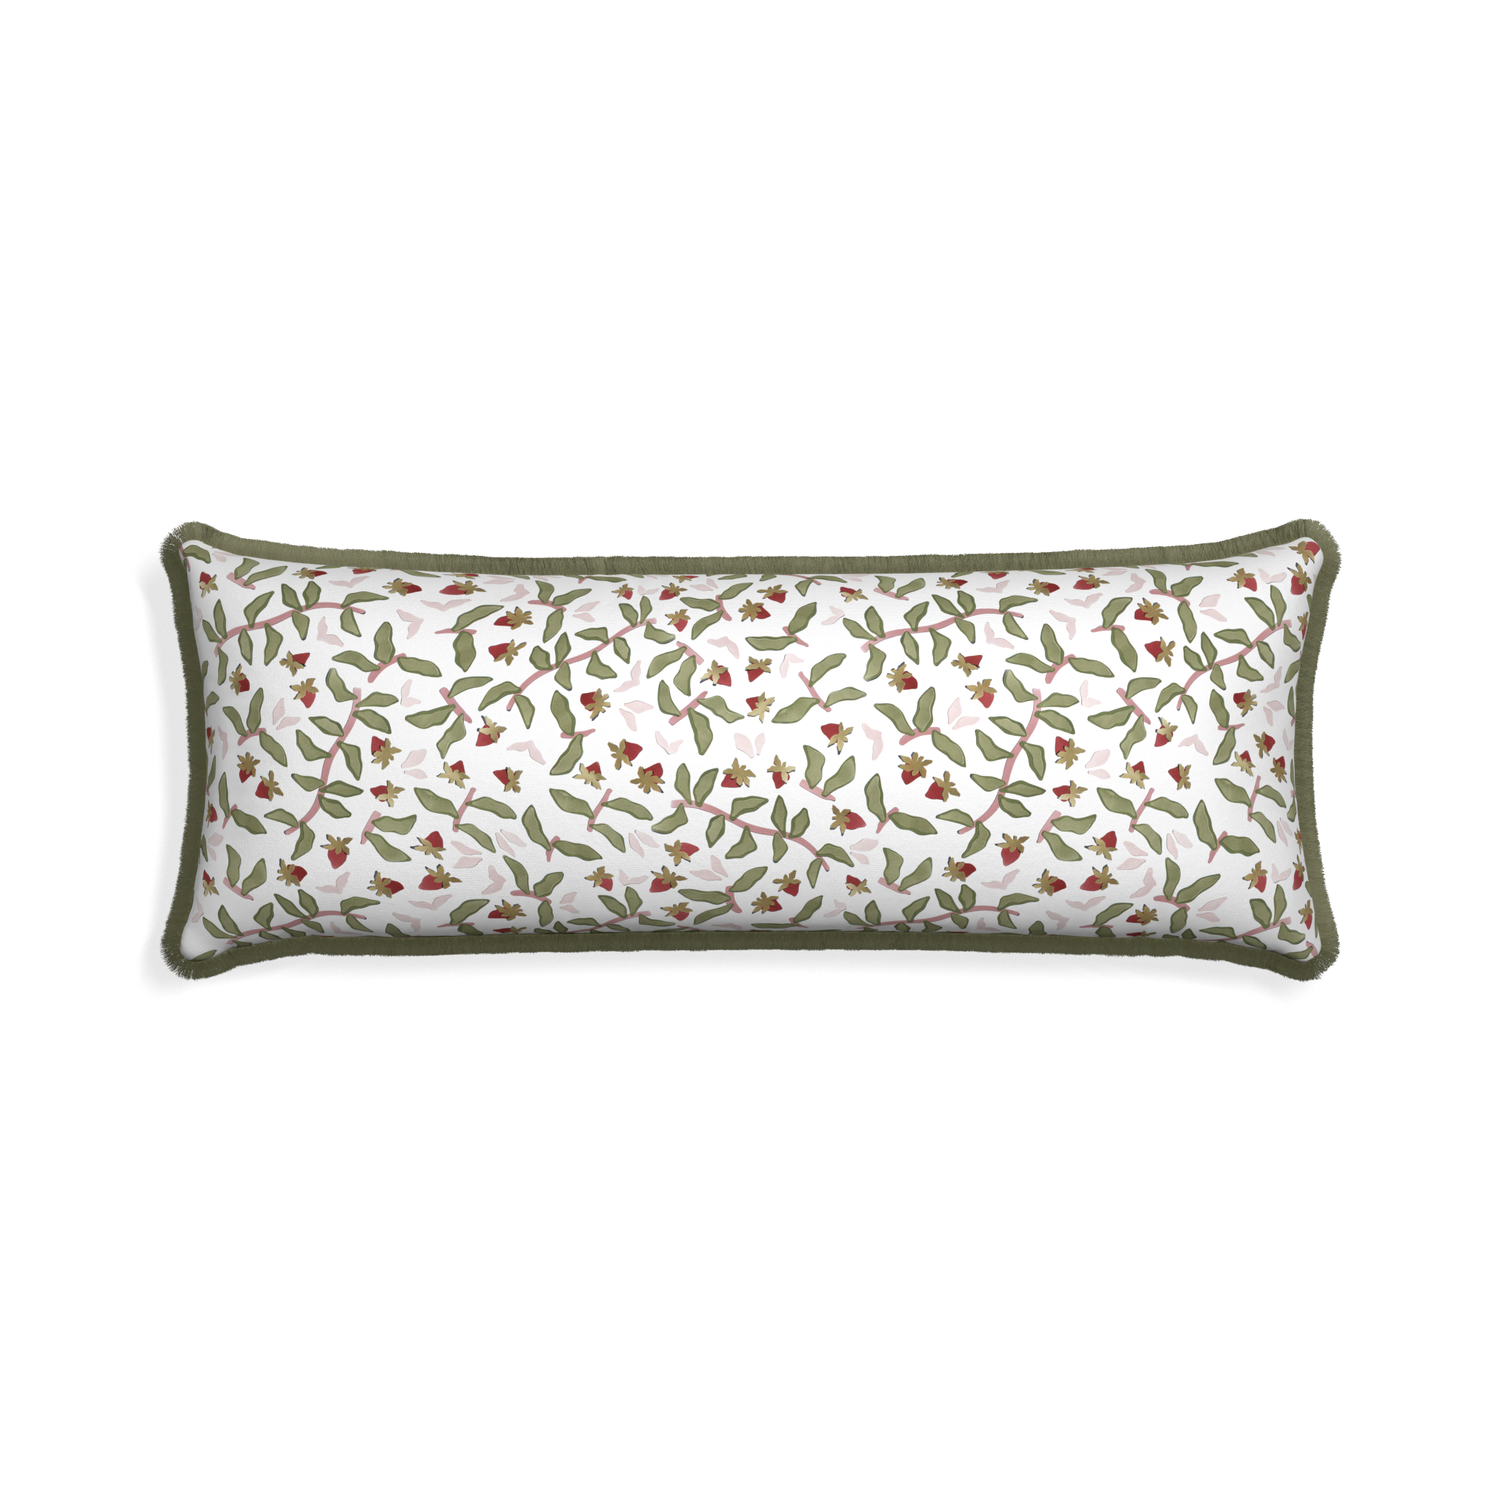 Xl-lumbar nellie custom pillow with sage fringe on white background